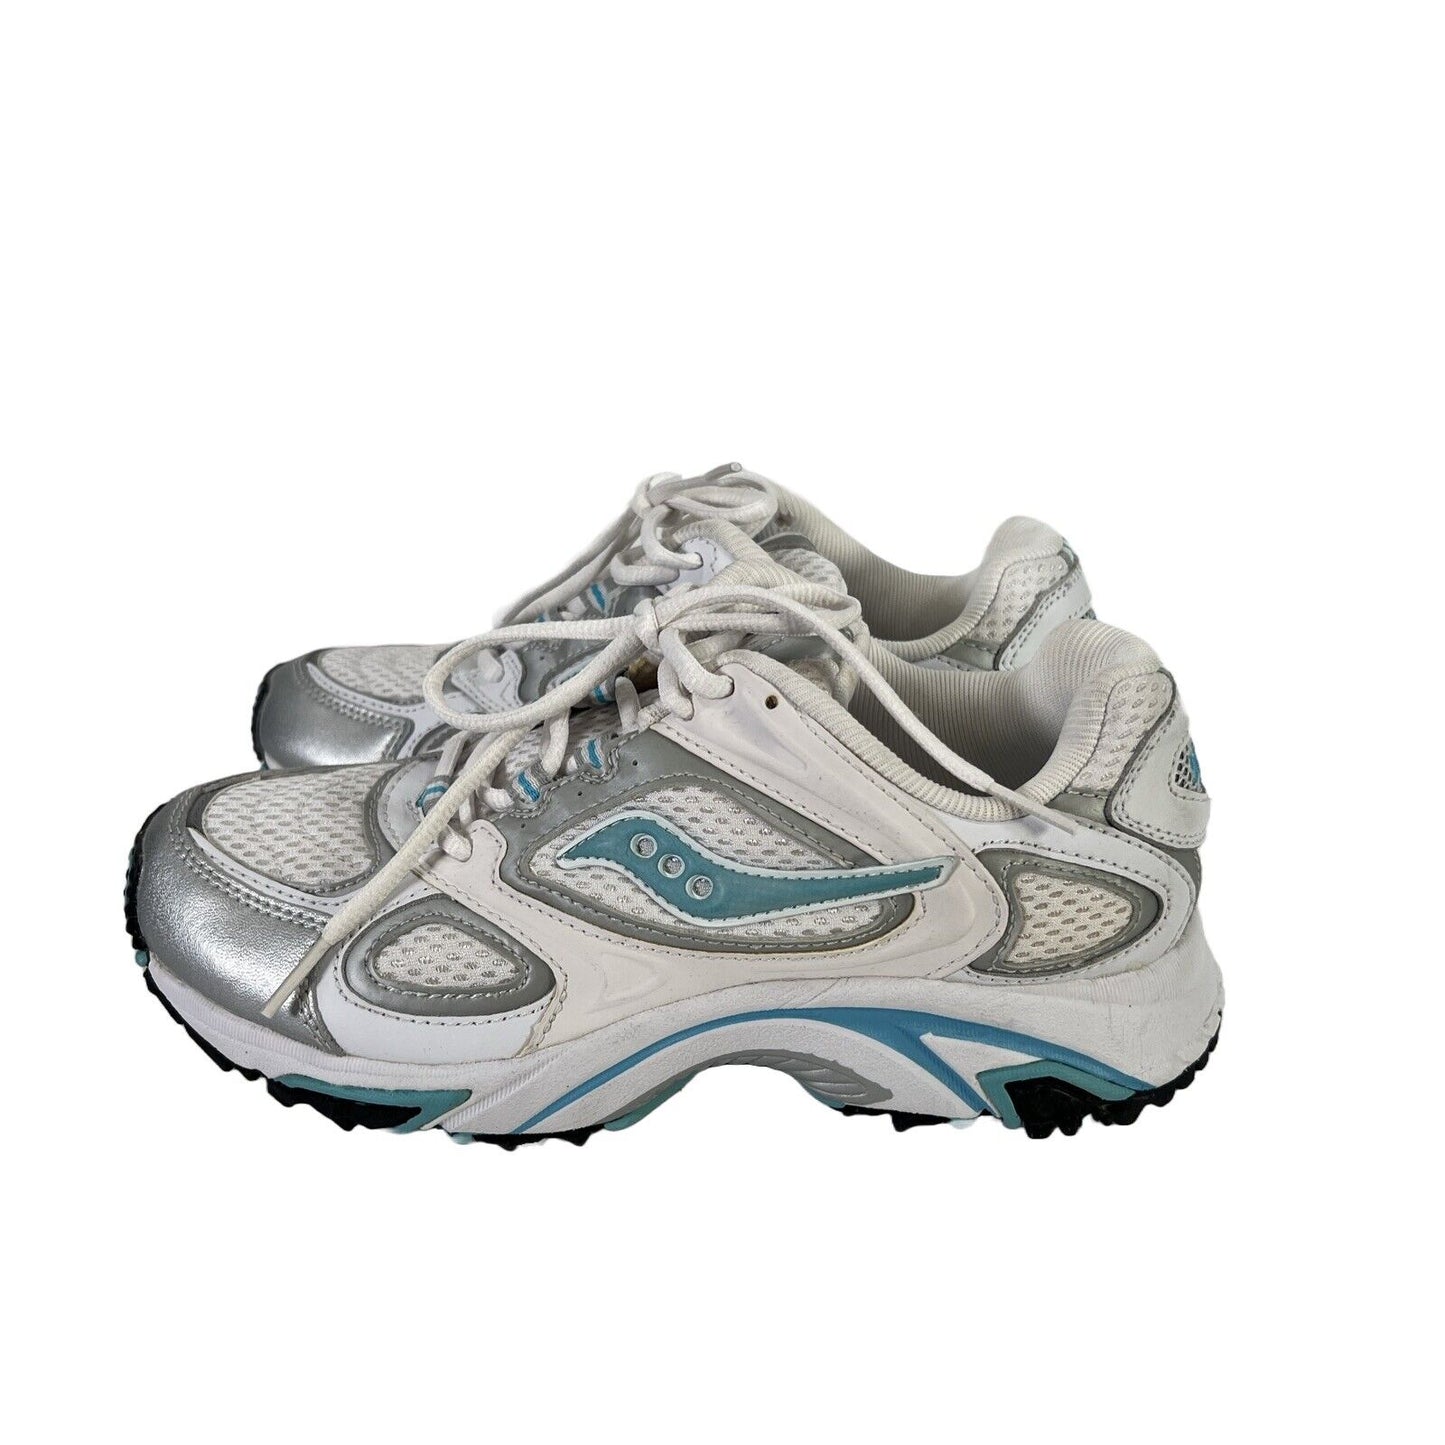 Saucony Women's White/Blue Lace Up Athletic Shoes - 6.5